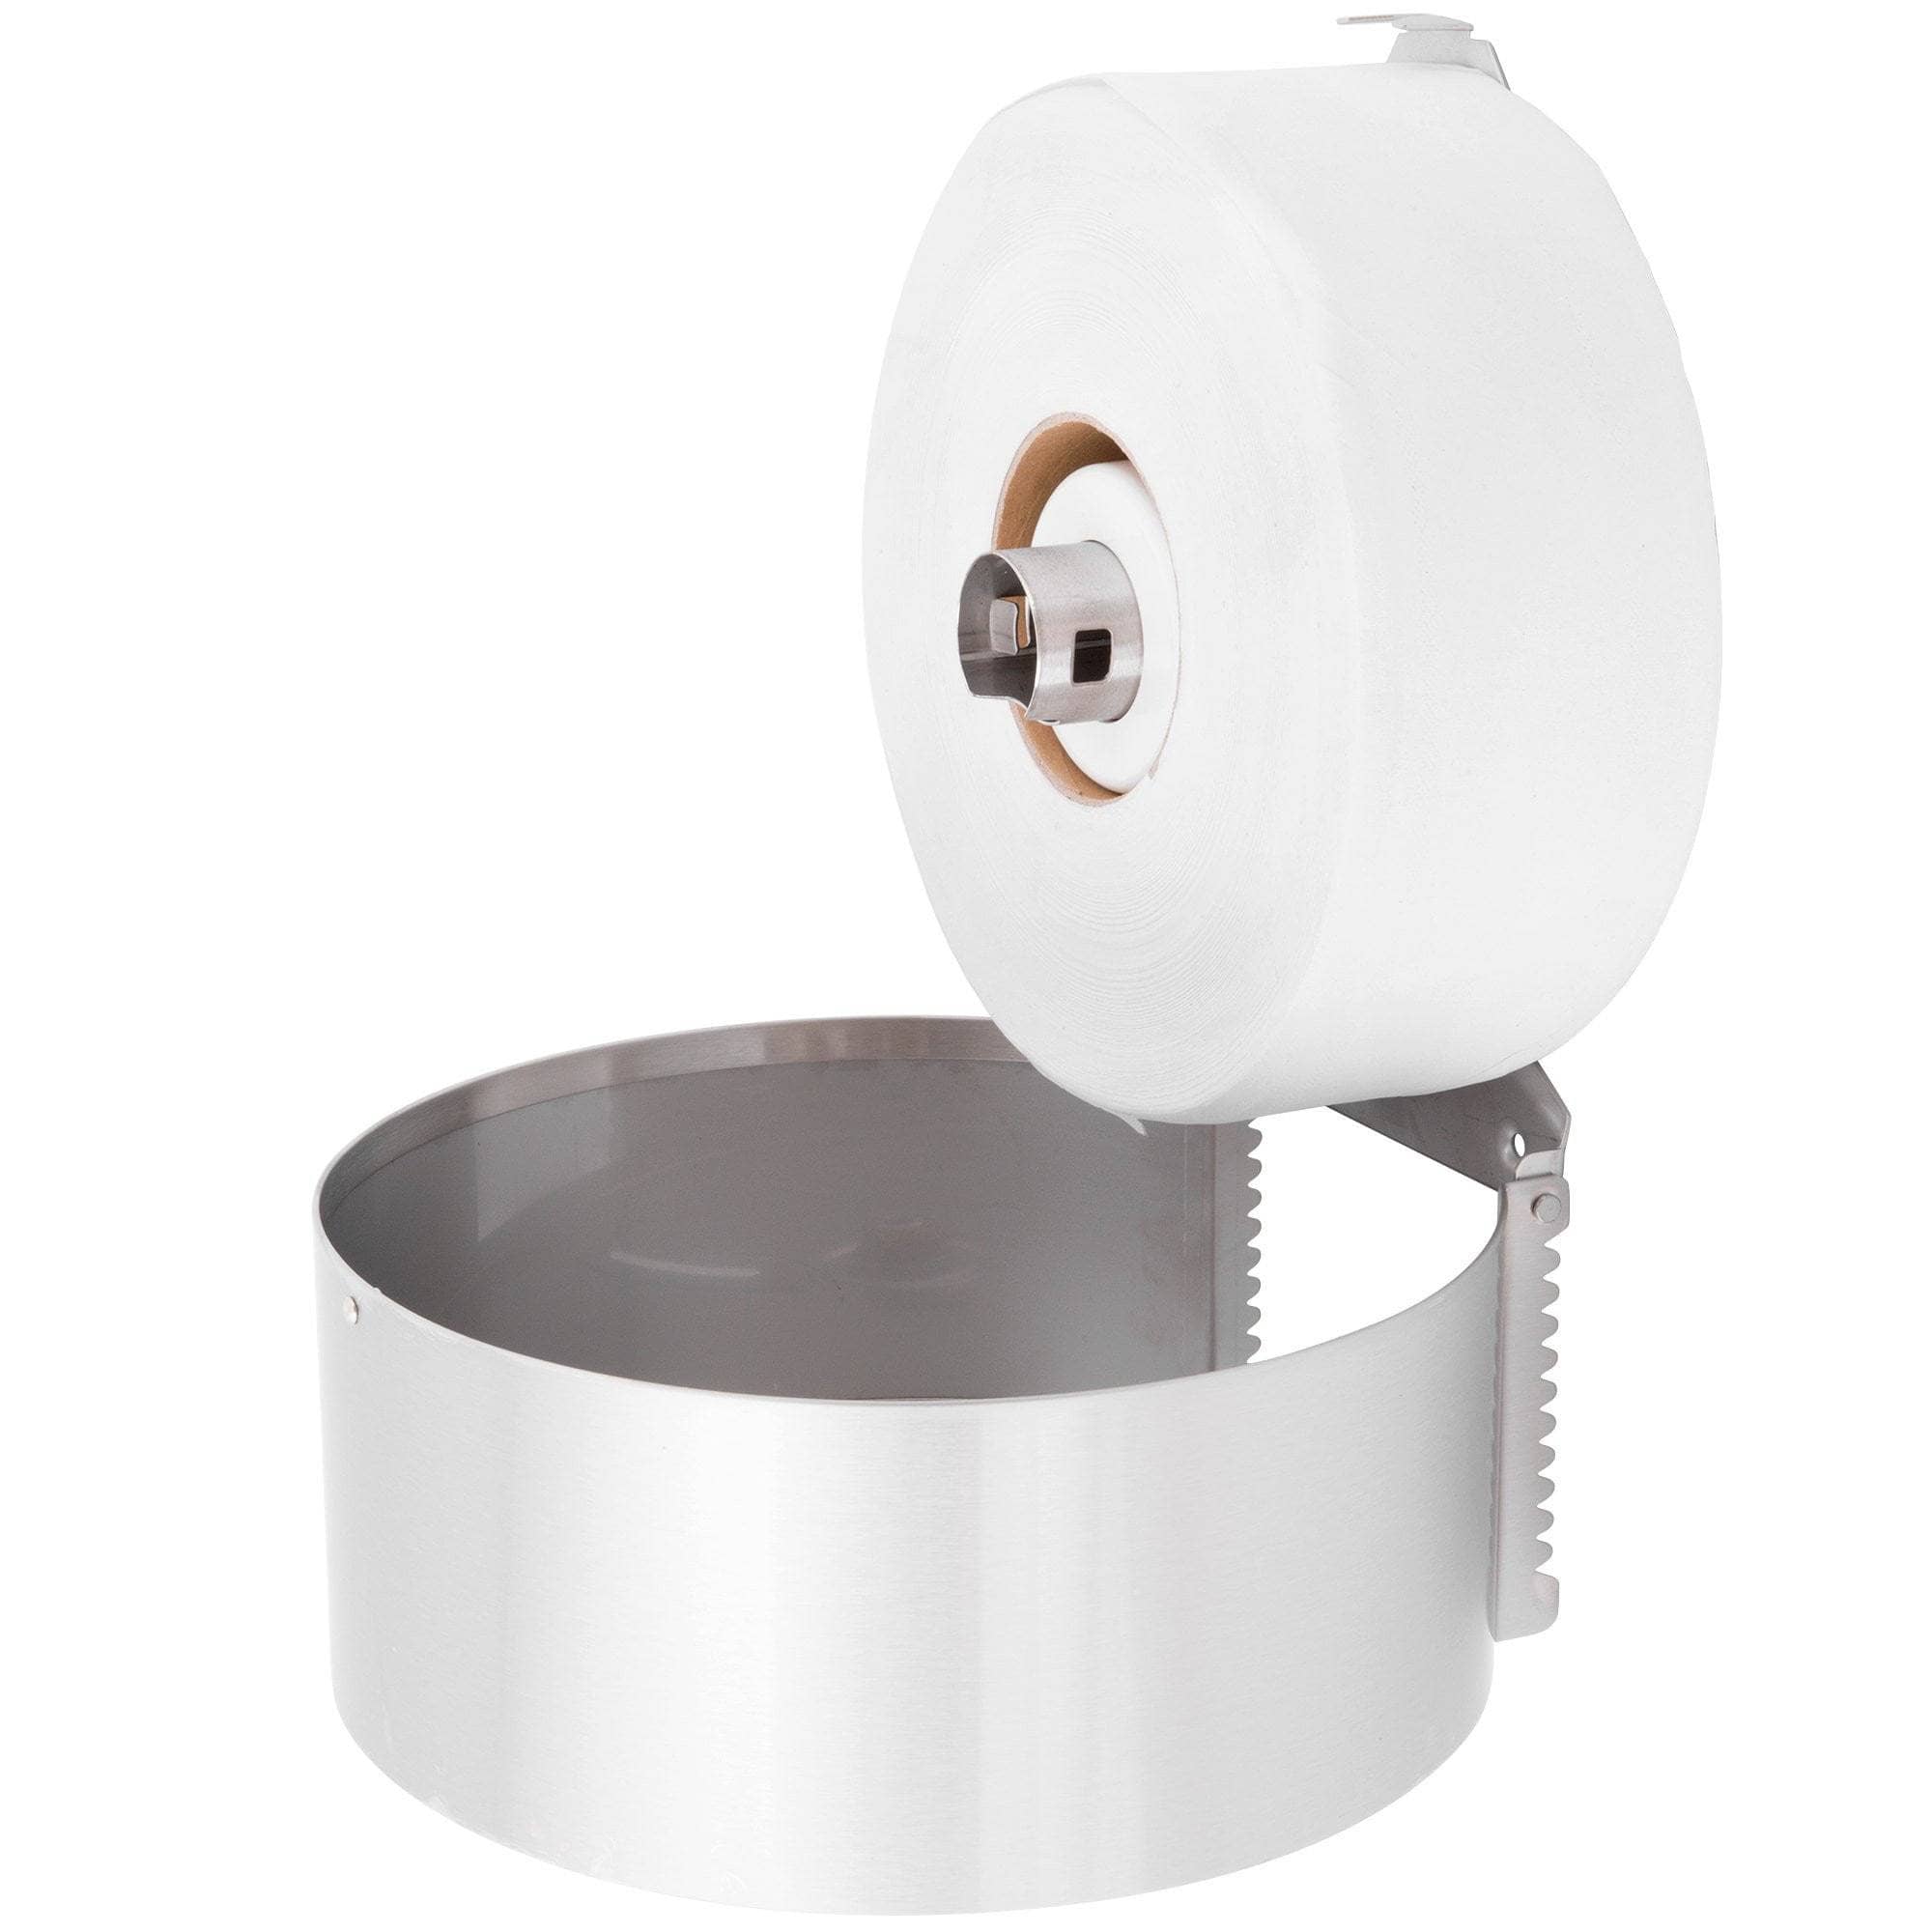 Bobrick B-2890 Commercial Toilet Paper Dispenser, Surface-Mounted, Stainless Steel w/ Satin Finish - TotalRestroom.com